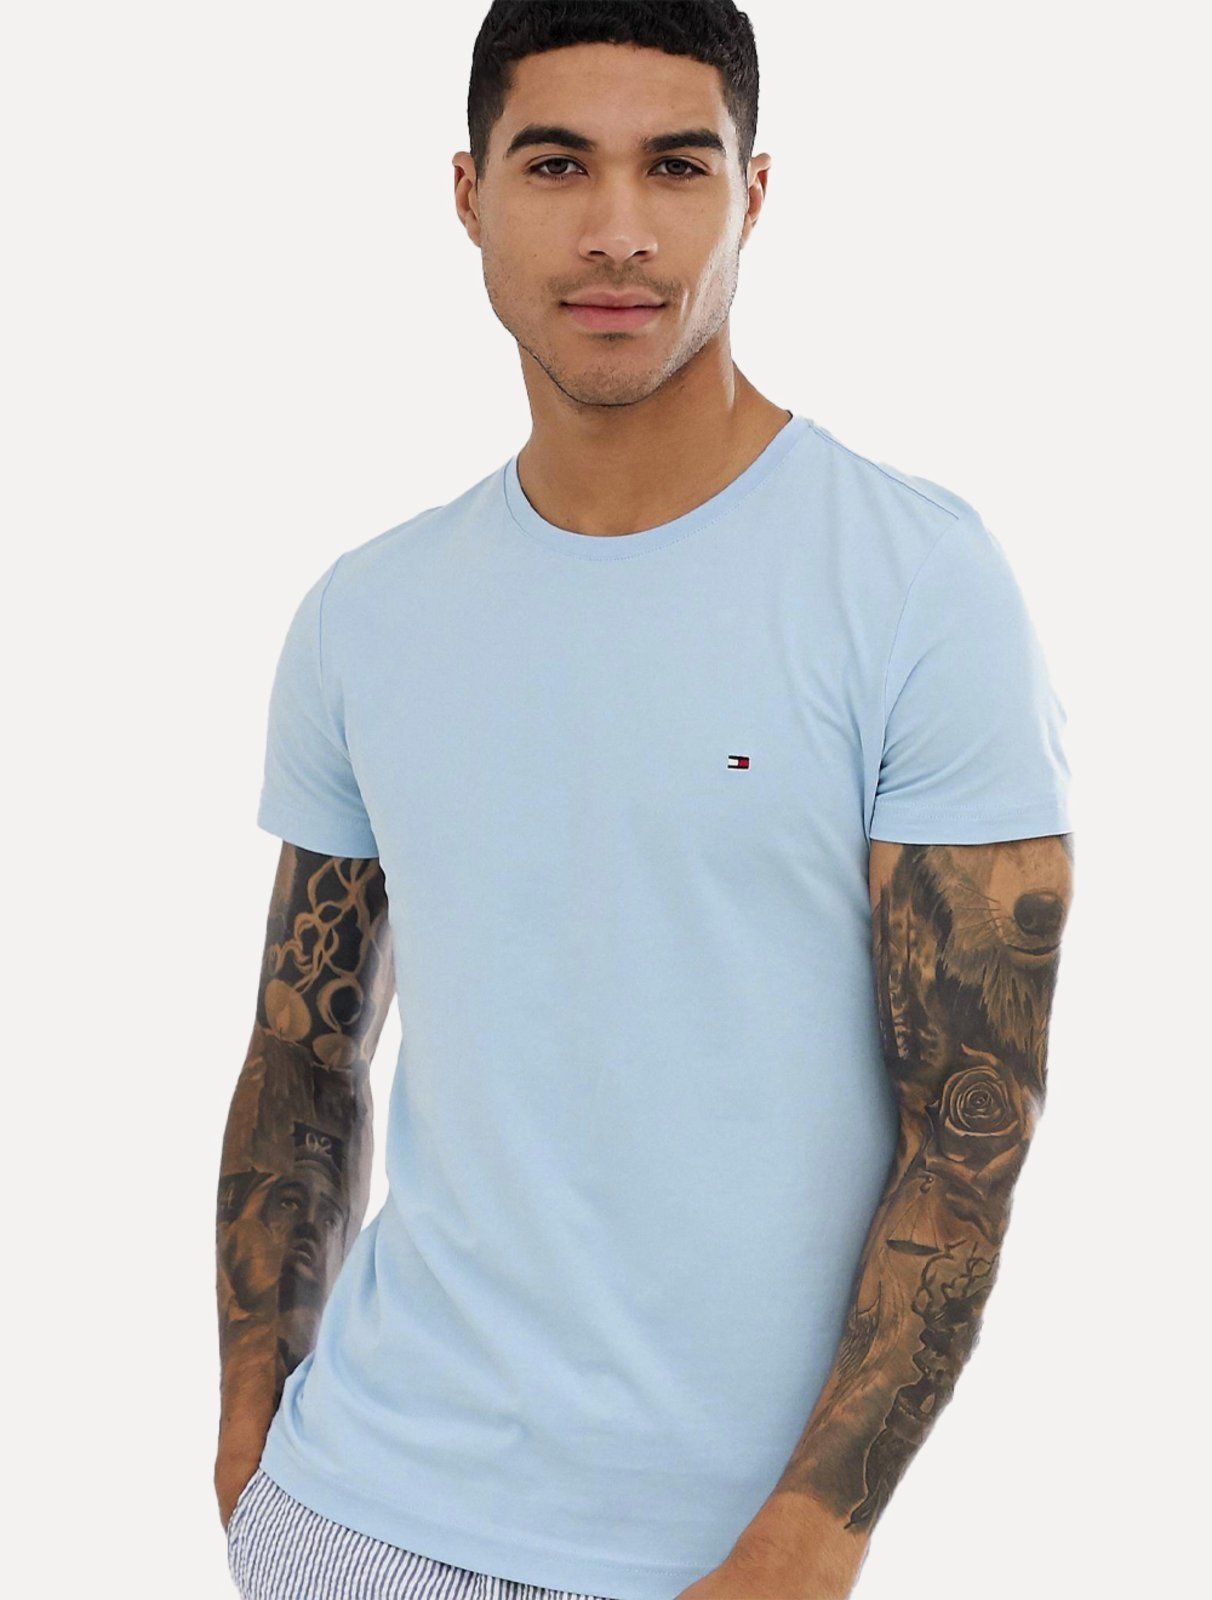 Camiseta Tommy Hilfiger Essential Cotton Azul Medio - KS MULTIMARCAS